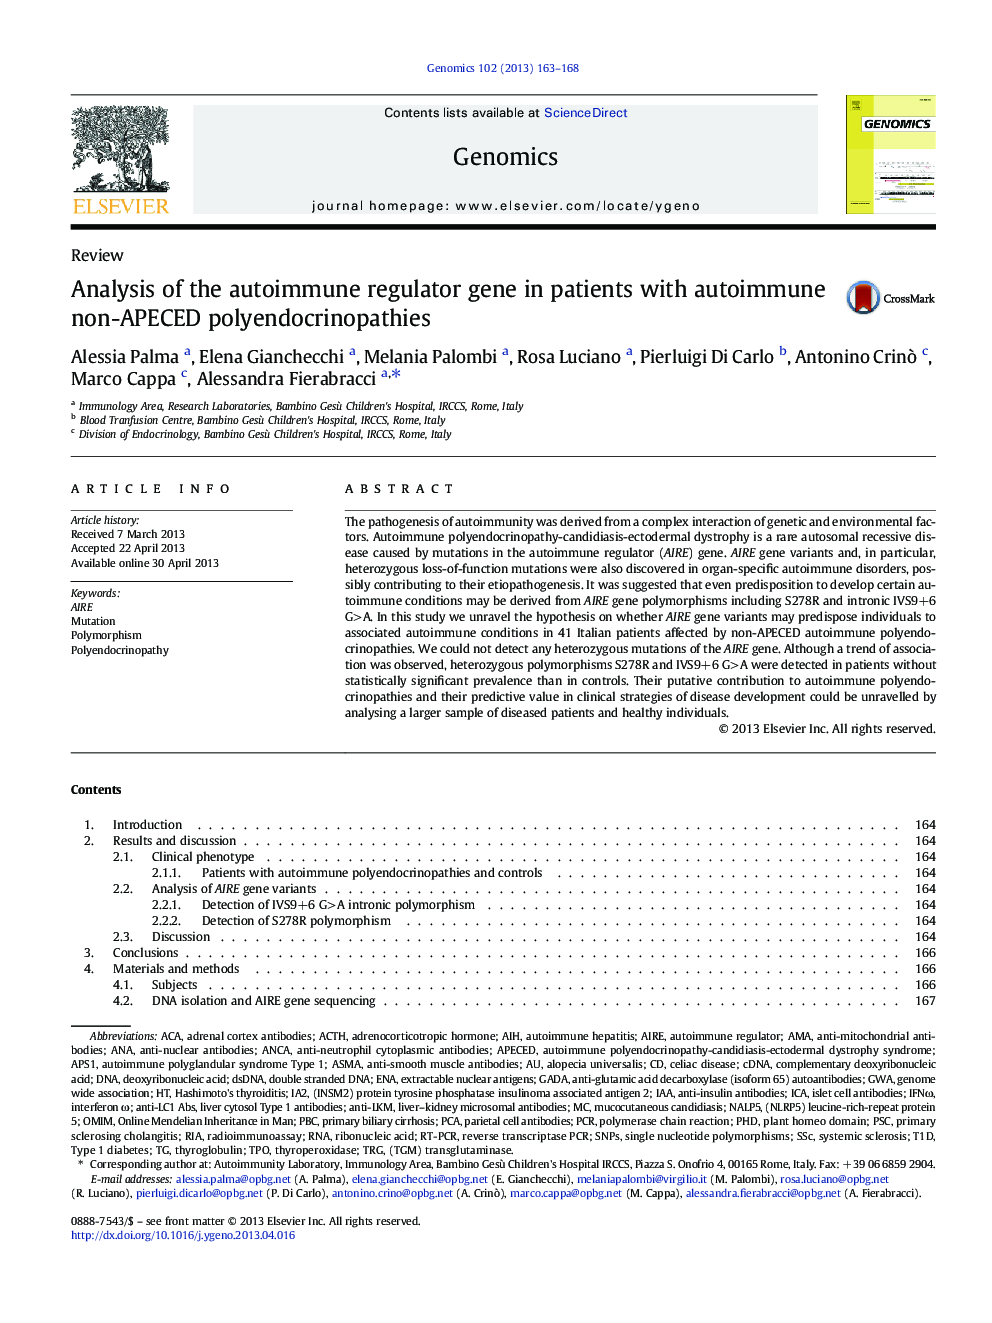 Analysis of the autoimmune regulator gene in patients with autoimmune non-APECED polyendocrinopathies